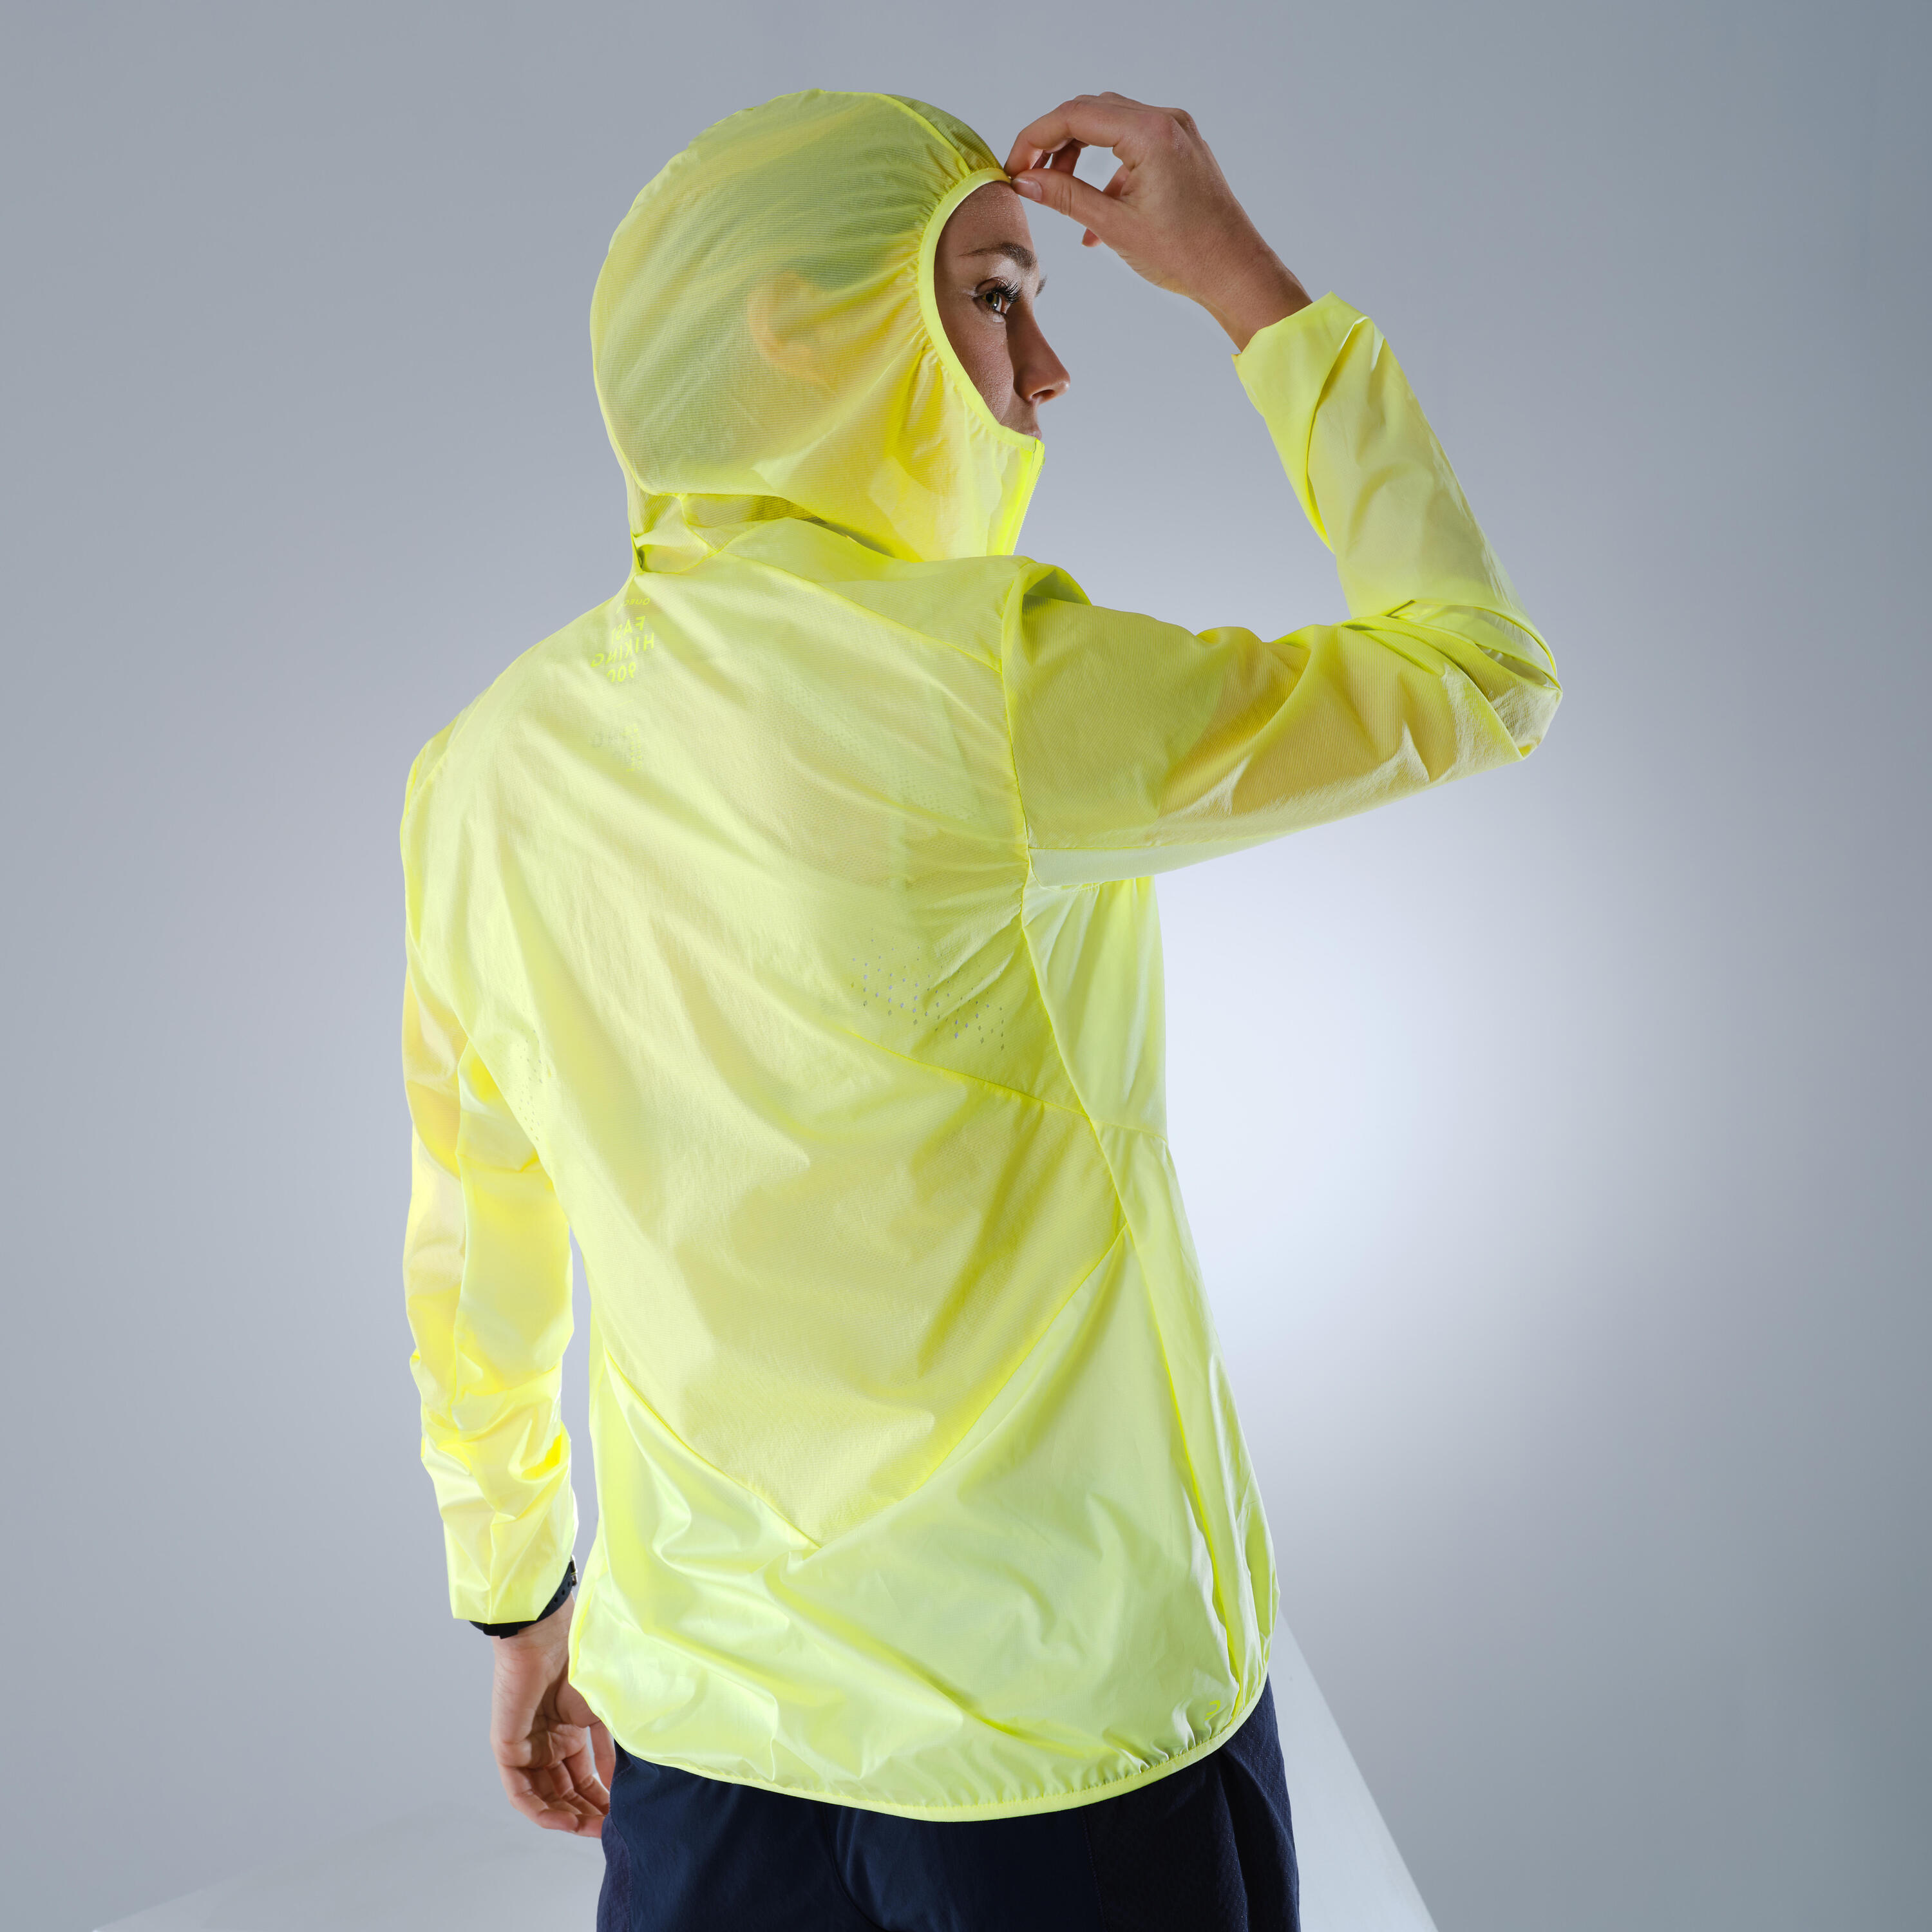 Women's Ultra-light Rapid Hiking Windproof Jacket FH 500 Hélium Wind - Yellow 5/5